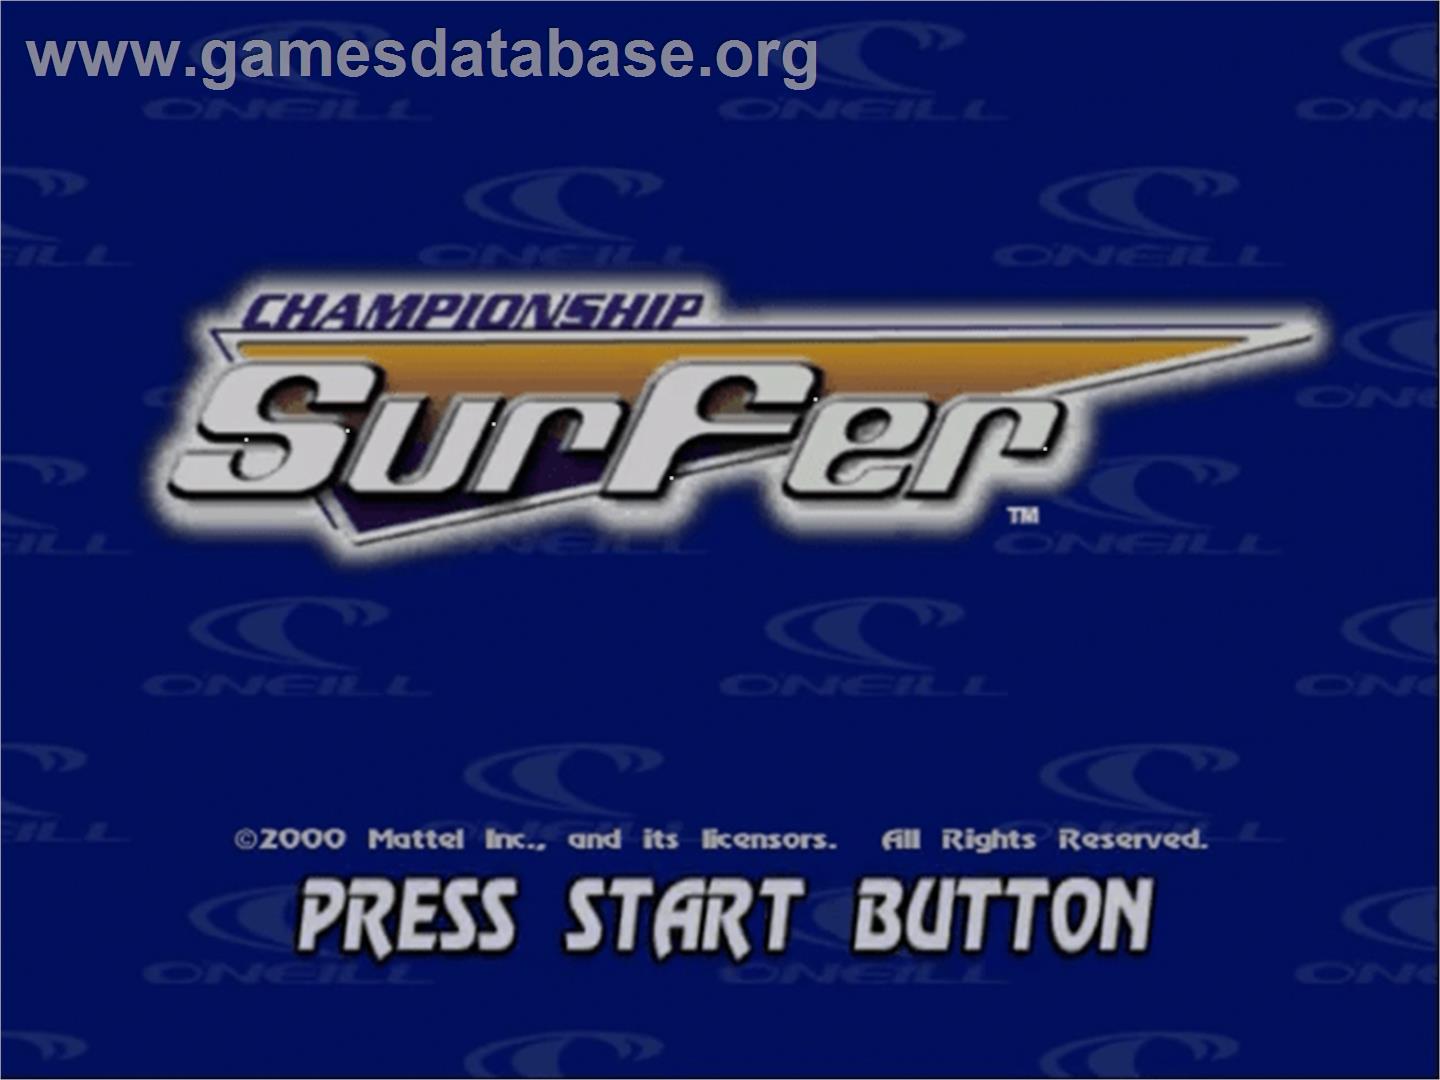 Championship Surfer - Sega Dreamcast - Artwork - Title Screen